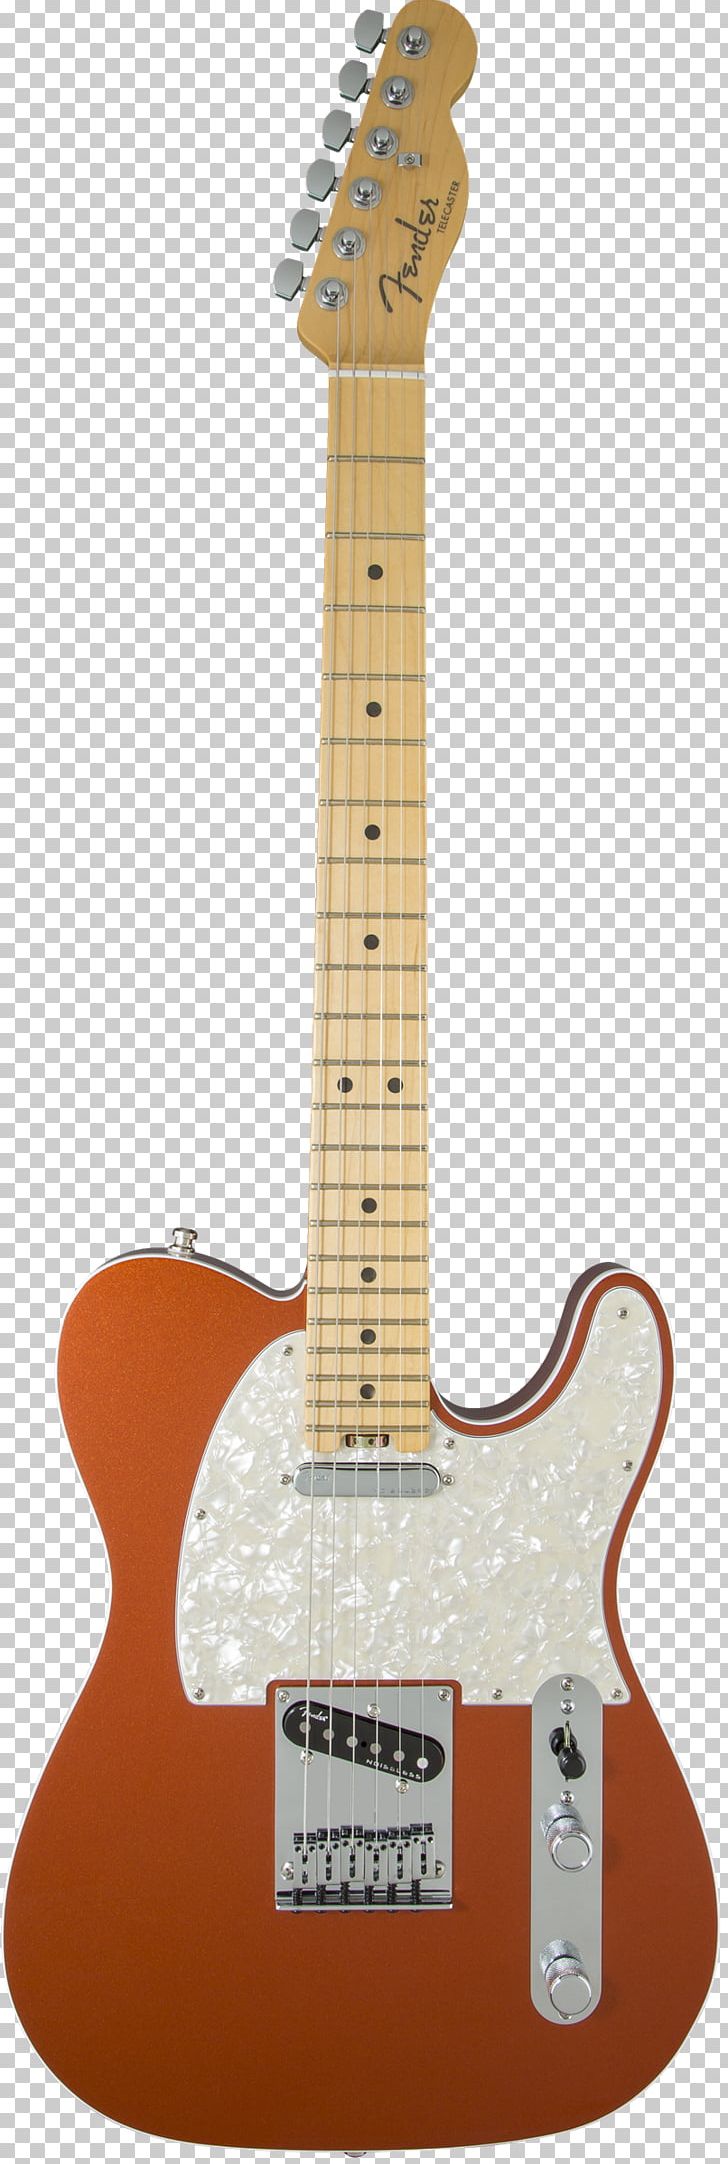 Fender Telecaster Thinline Fender Stratocaster Guitar Fender Musical Instruments Corporation PNG, Clipart, Acoustic Electric Guitar, Acoustic Guitar, Guitar, Guitar Accessory, Musical Instrument Free PNG Download